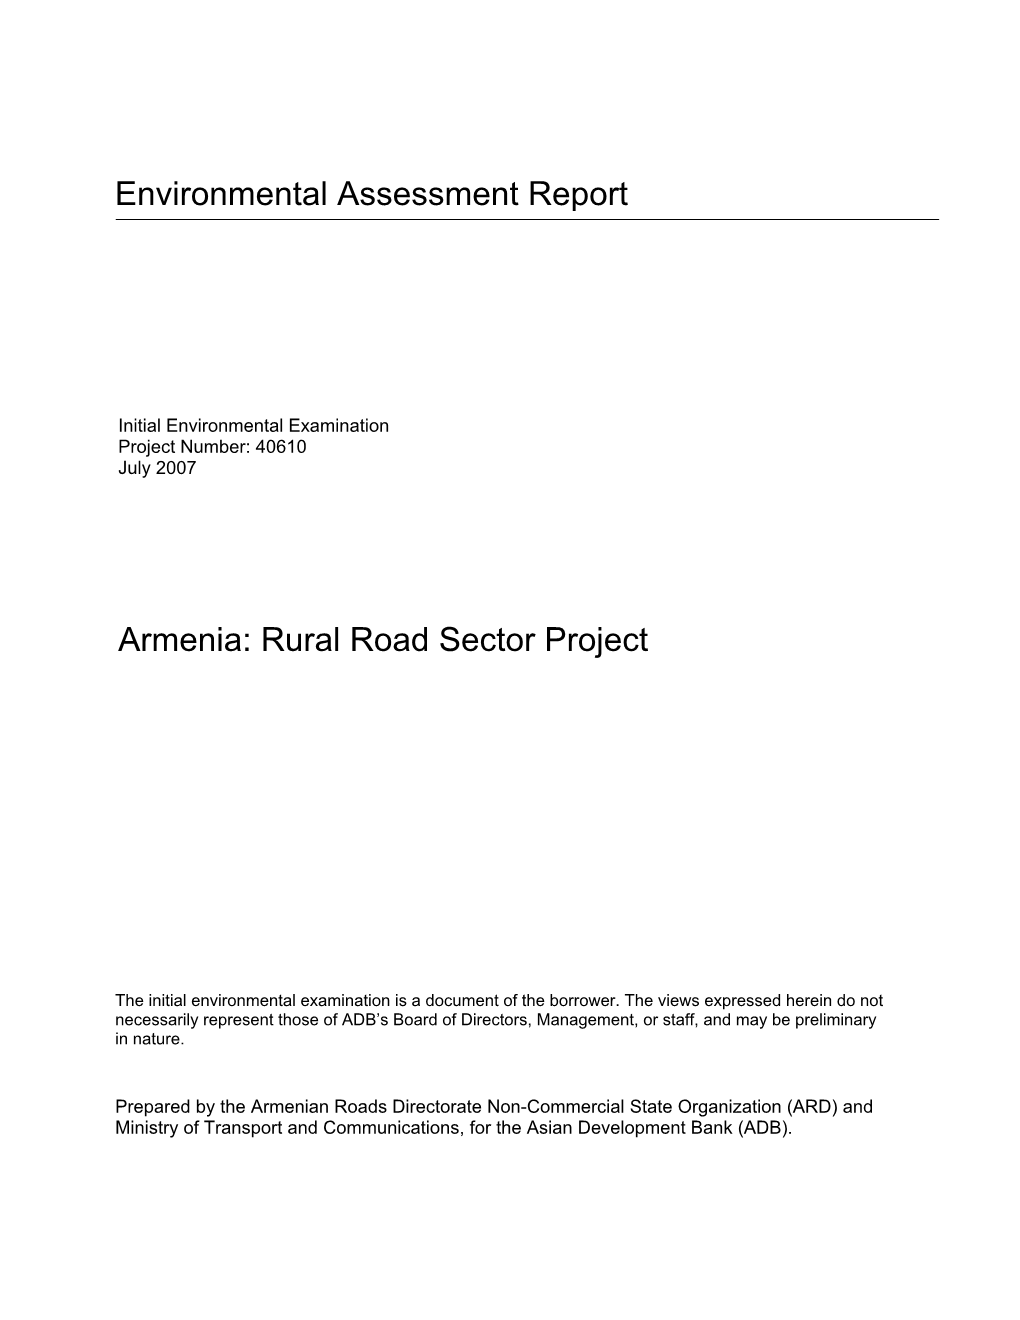 Armenia: Rural Road Sector Project